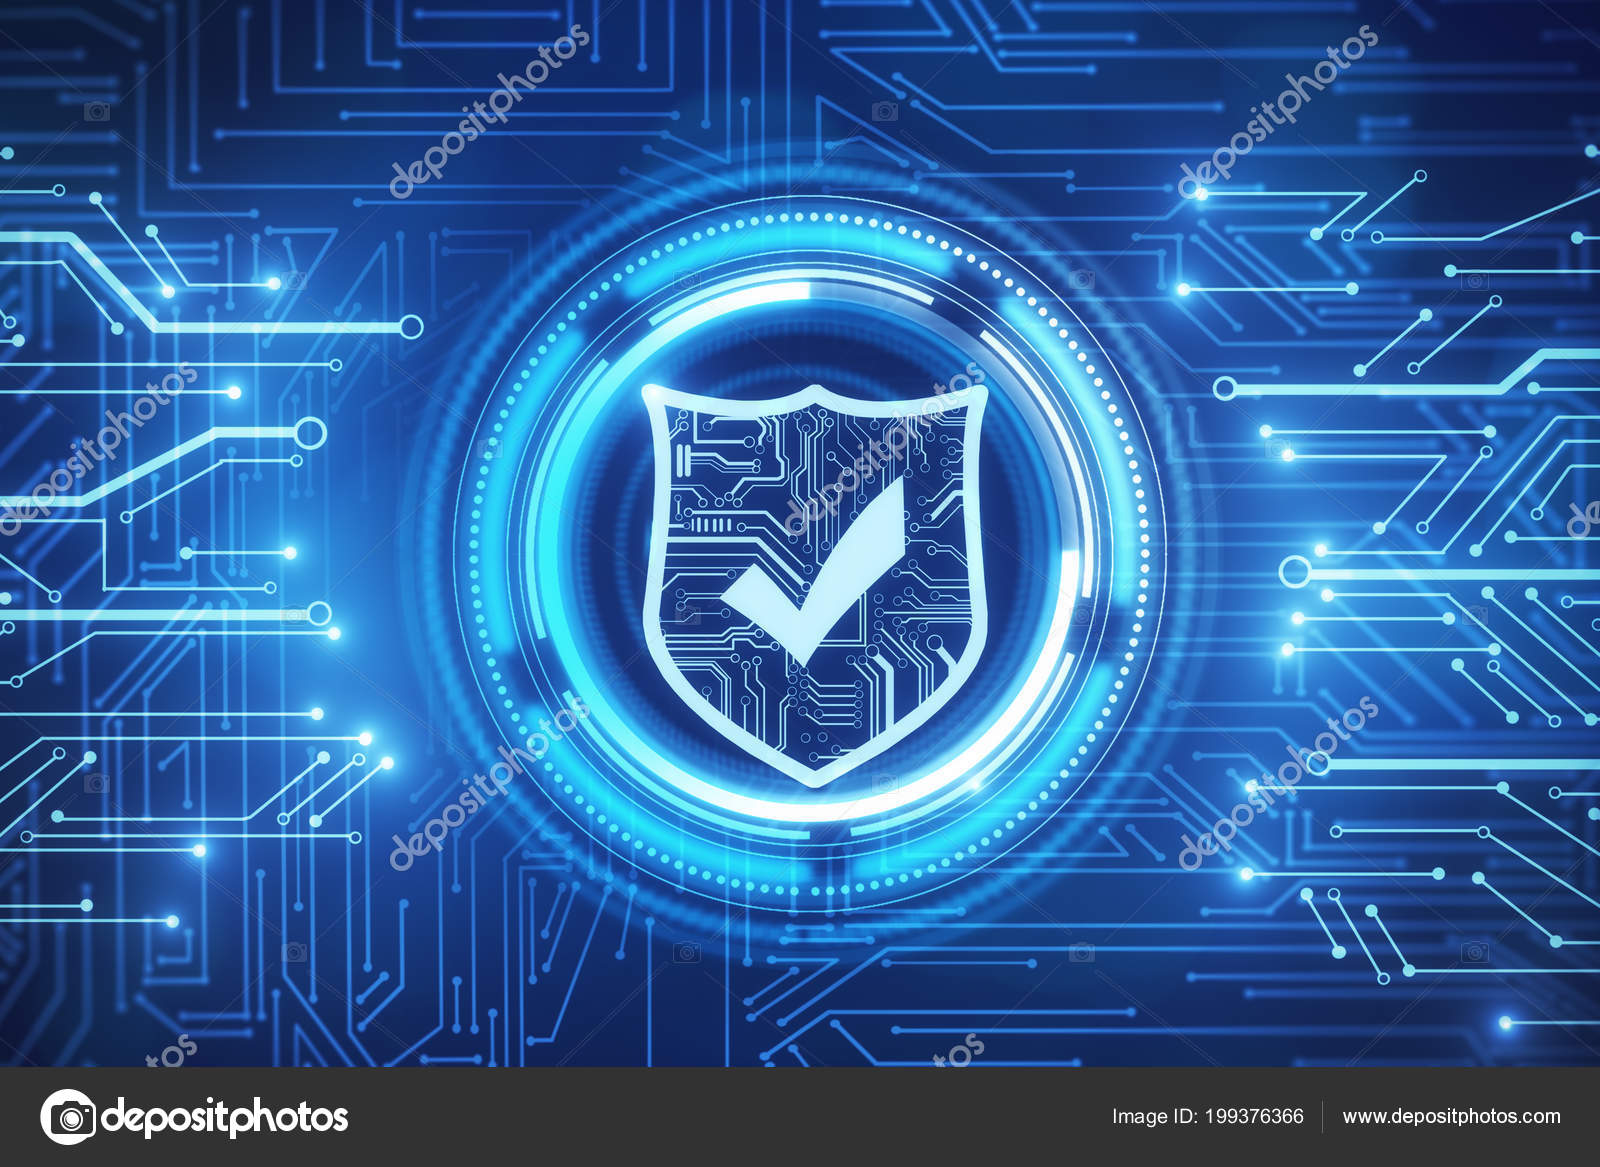 cm security wallpaper,electric blue,blue,line,technology,design